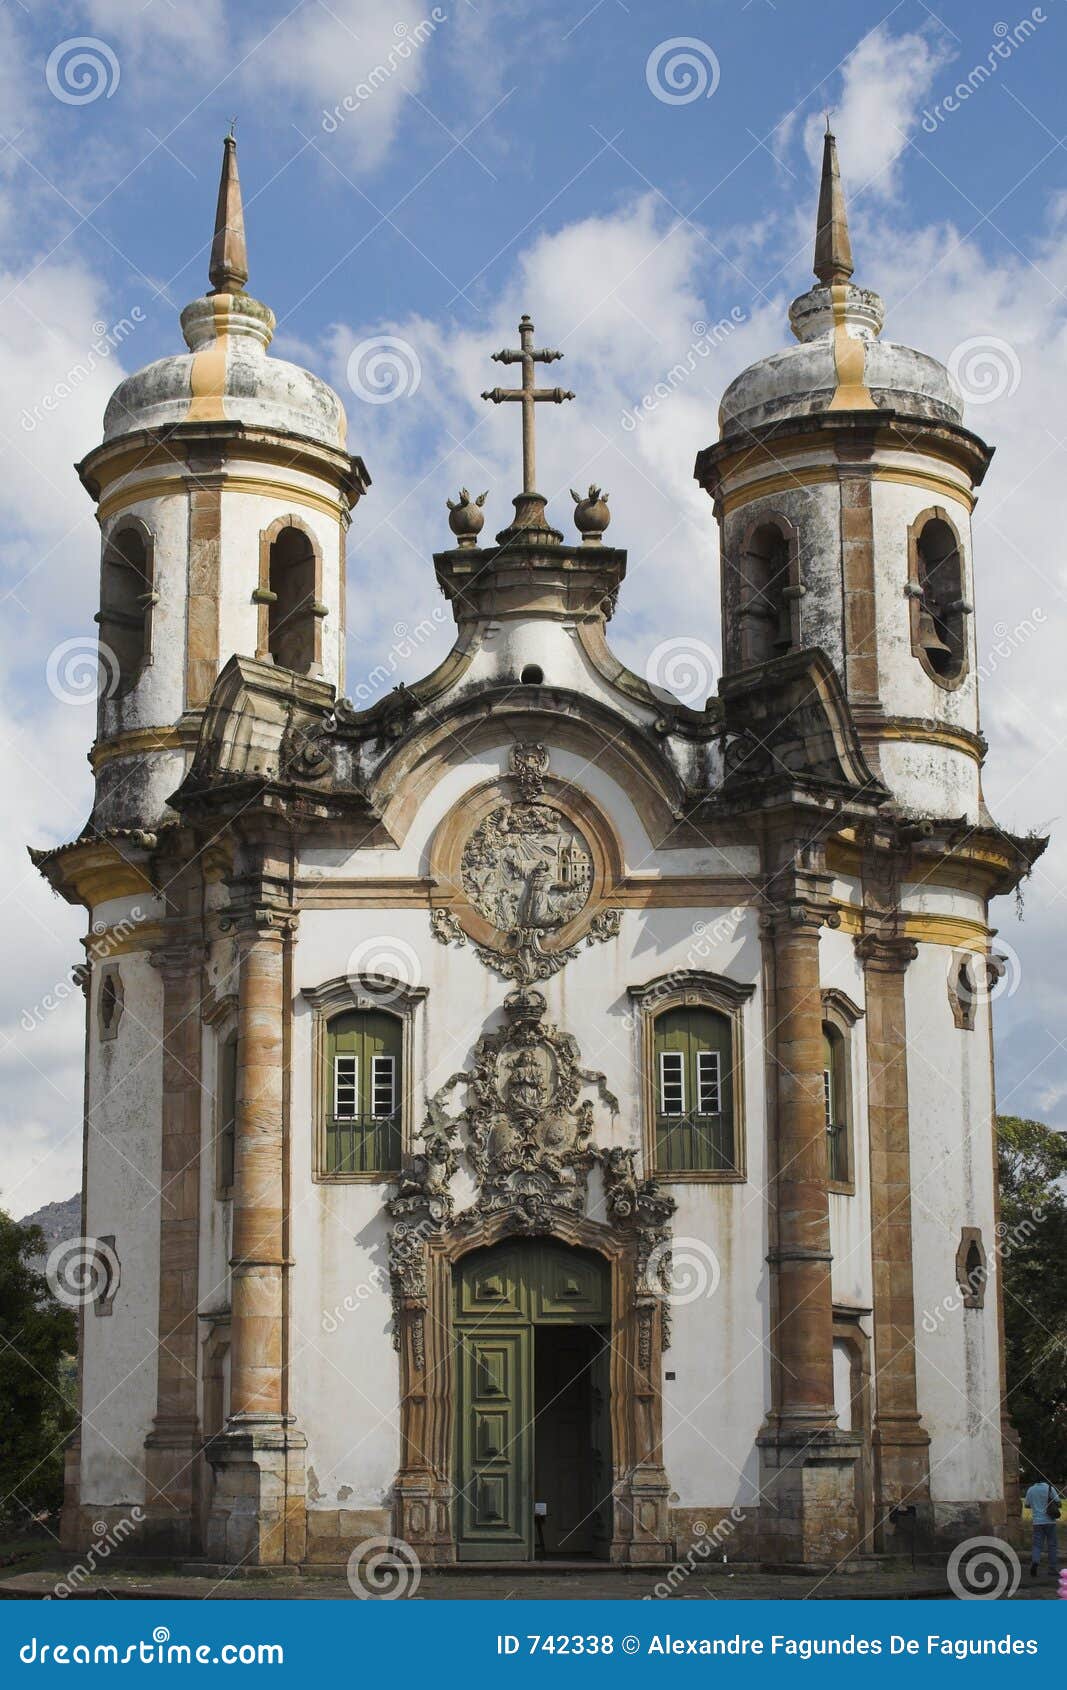 church of sao francisco de assis ouro preto